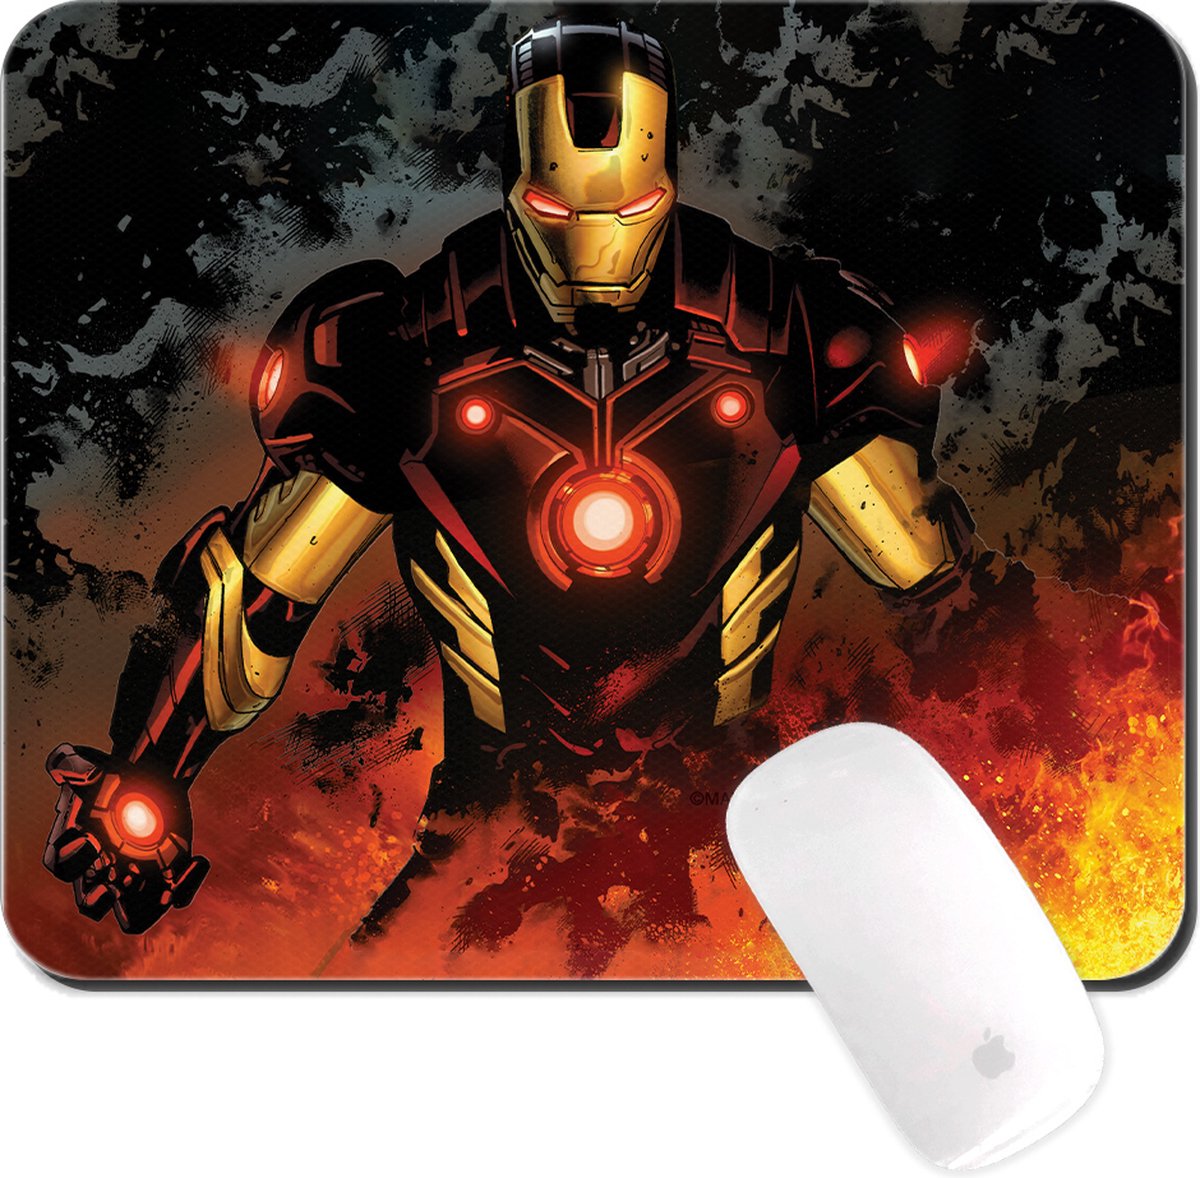 Marvel Iron Man - Muismat 22x18cm 3mm dik